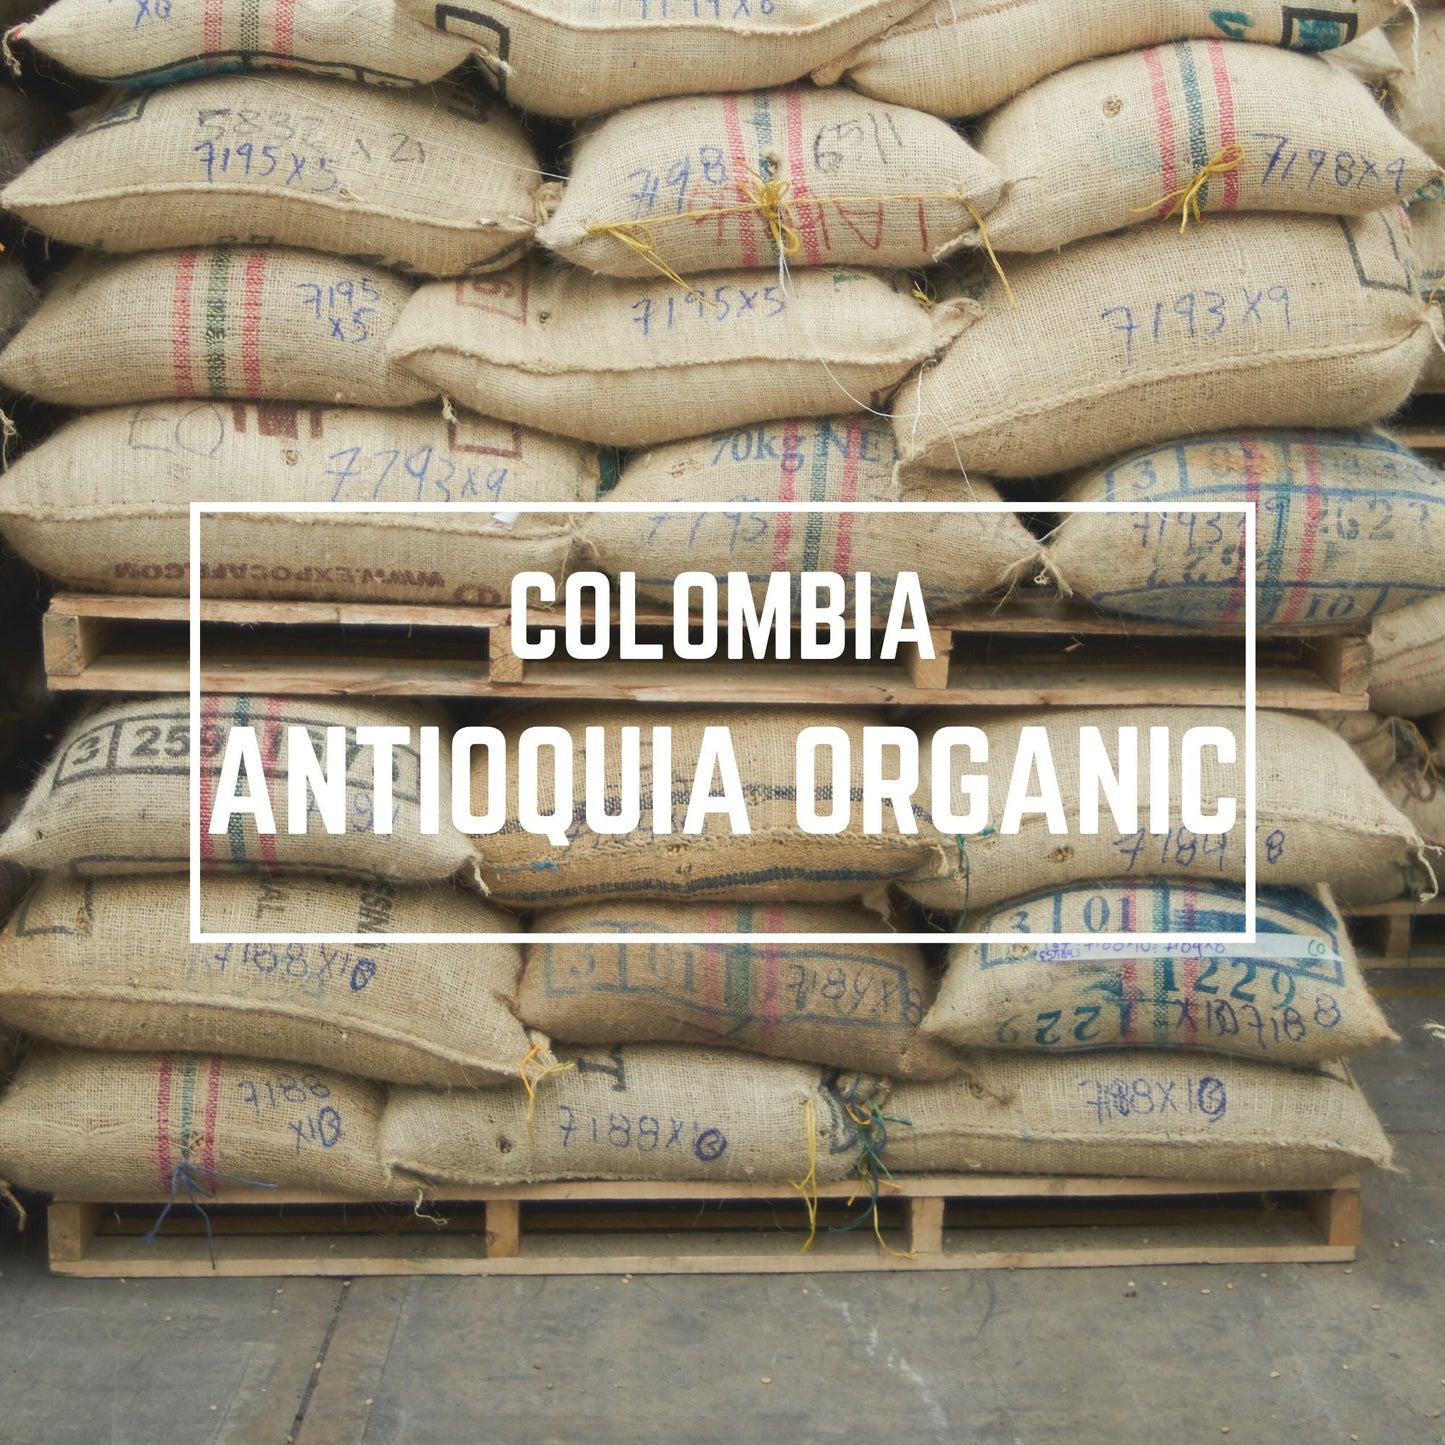 Colombia Antioquia Organic